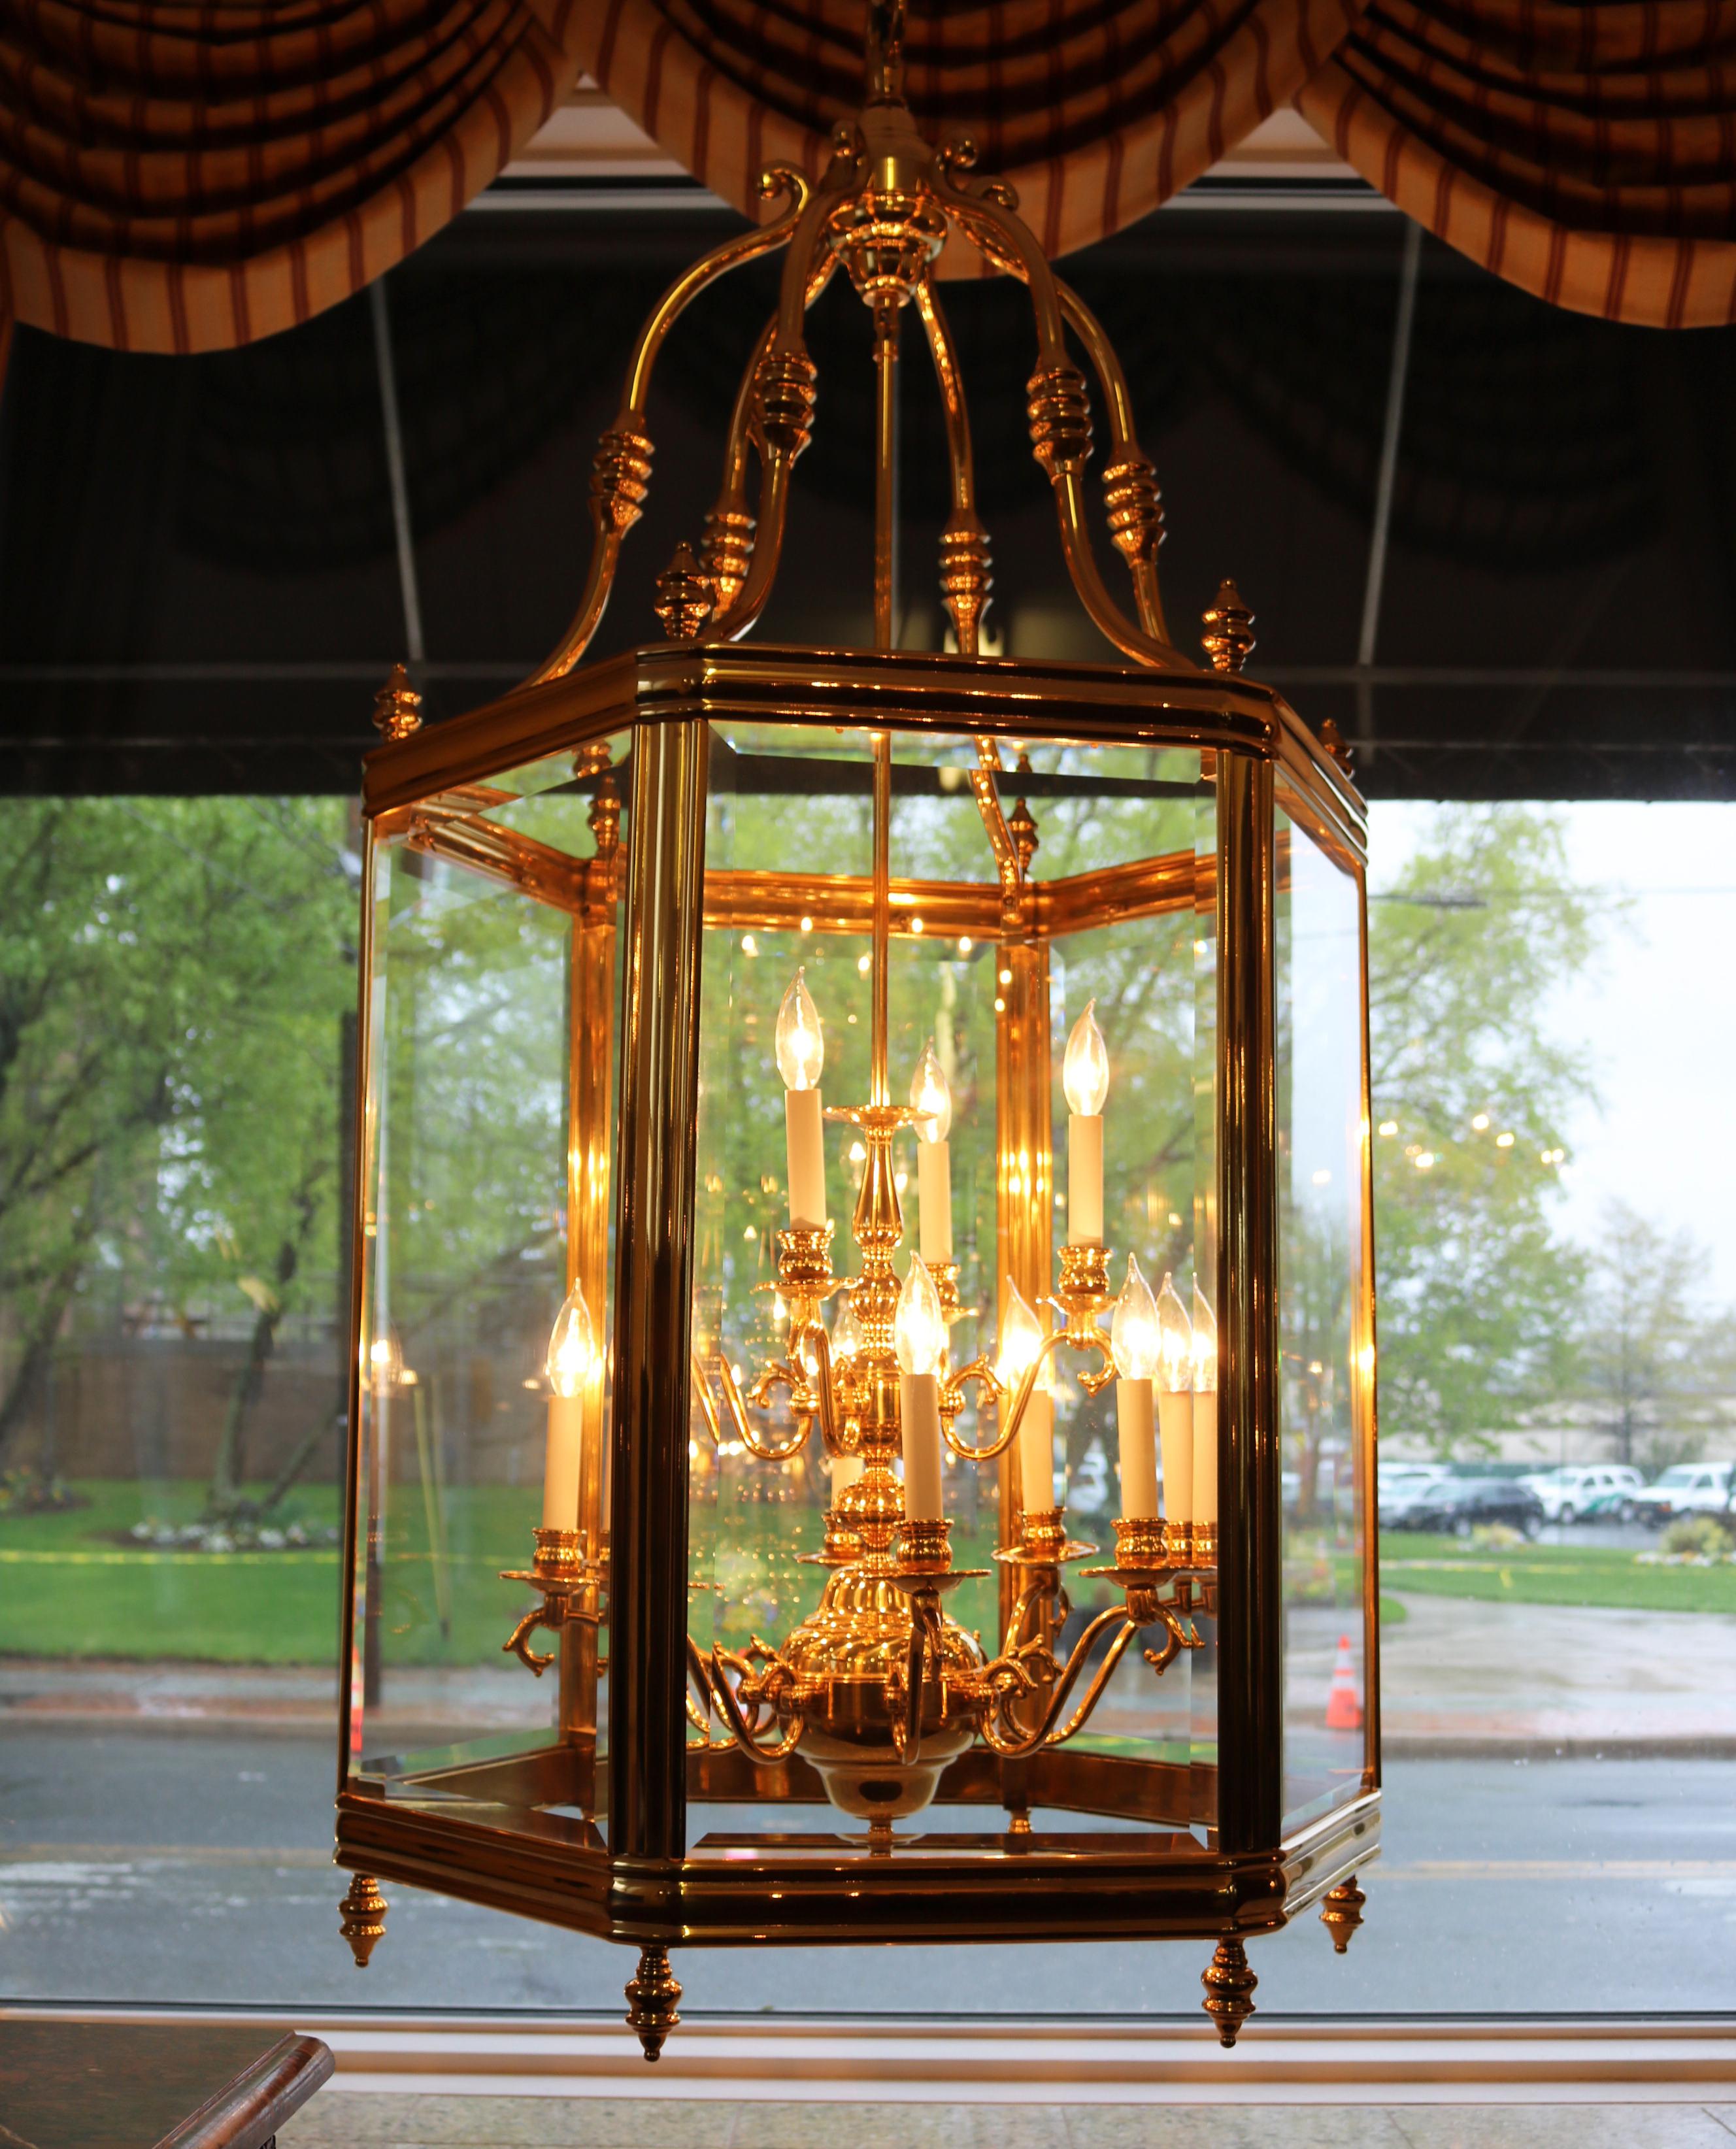 ​Monumental Over 4 FT Tall 12 Light Brass & Glass Chandelier Lantern

Dimensions : 56